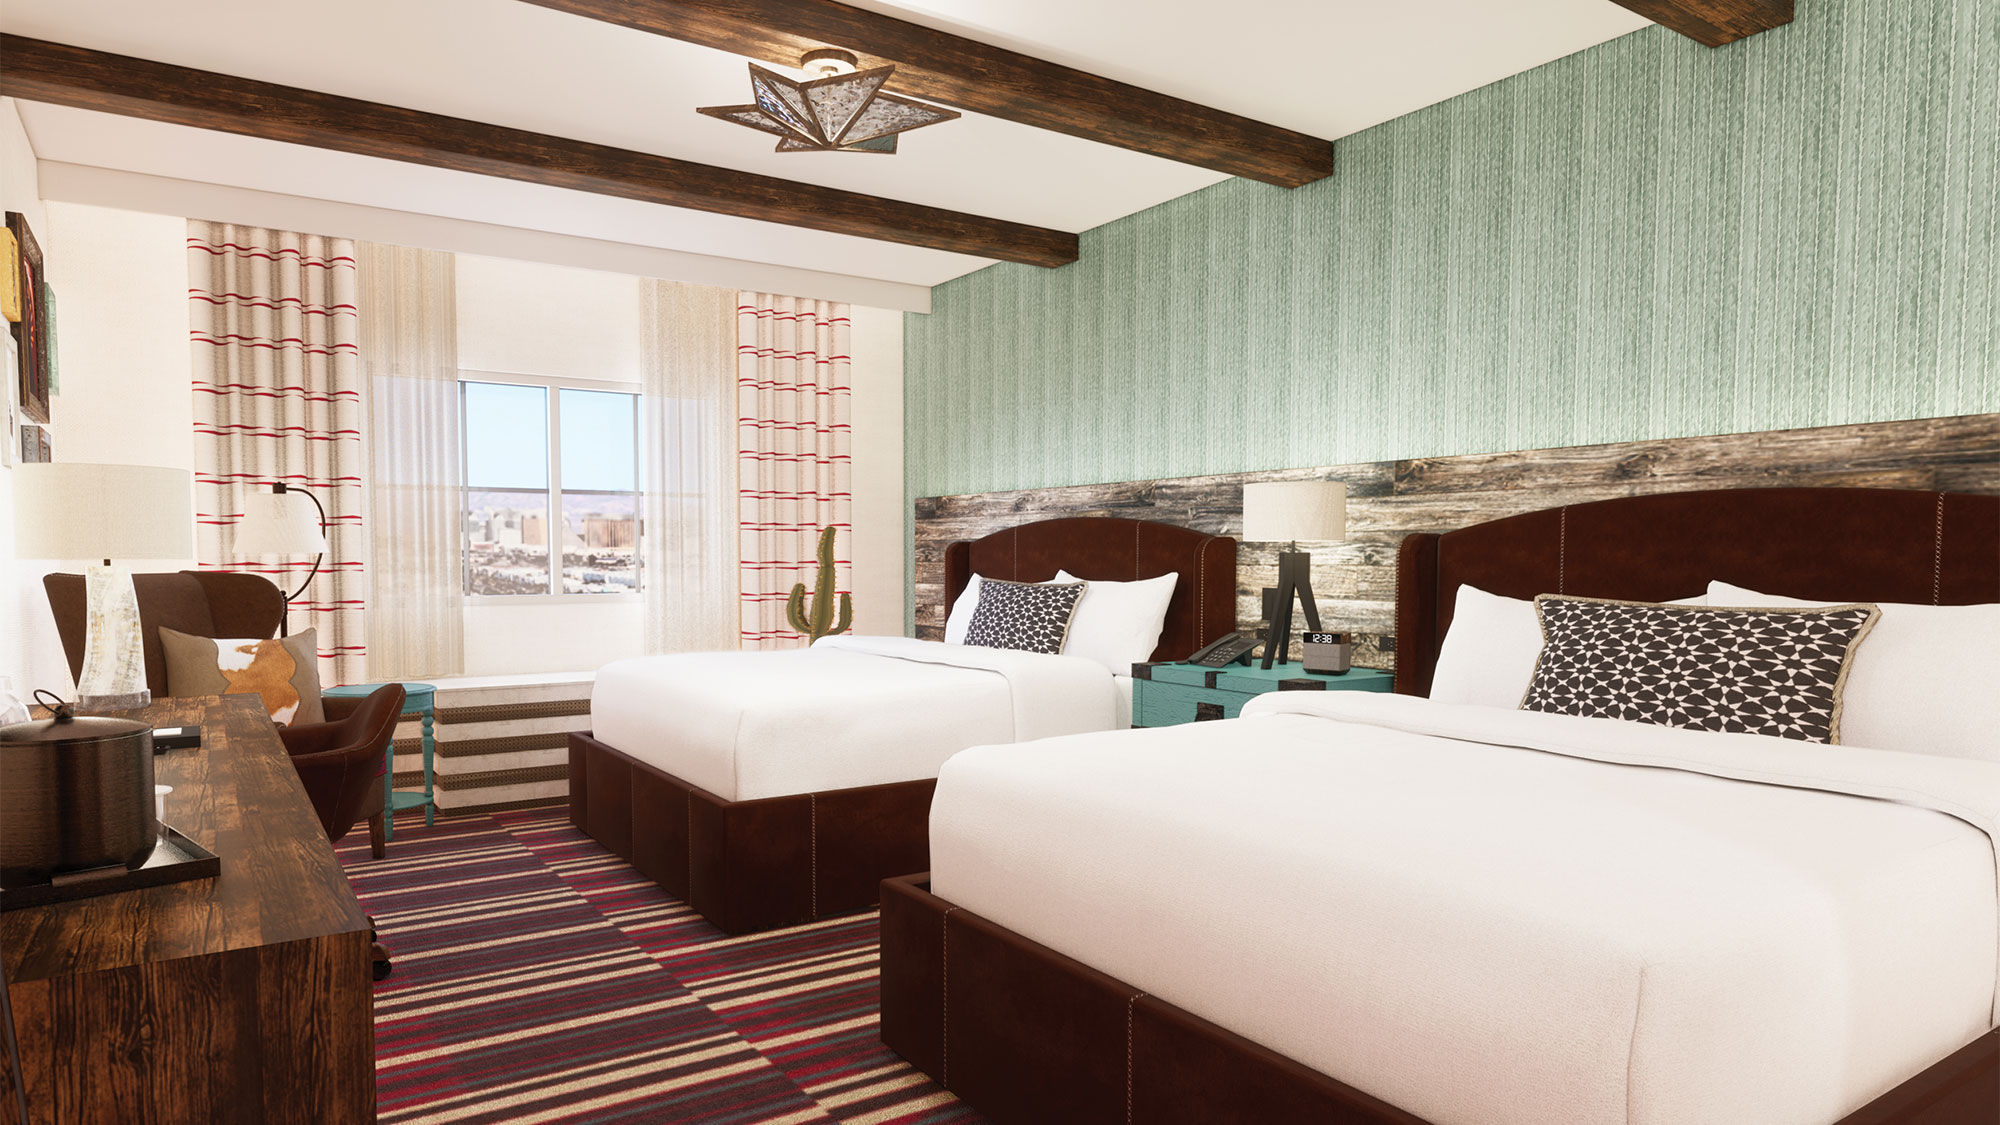 Silverton Casino Hotel in Las Vegas goes for 'rustic elegance' in its remodel: T..